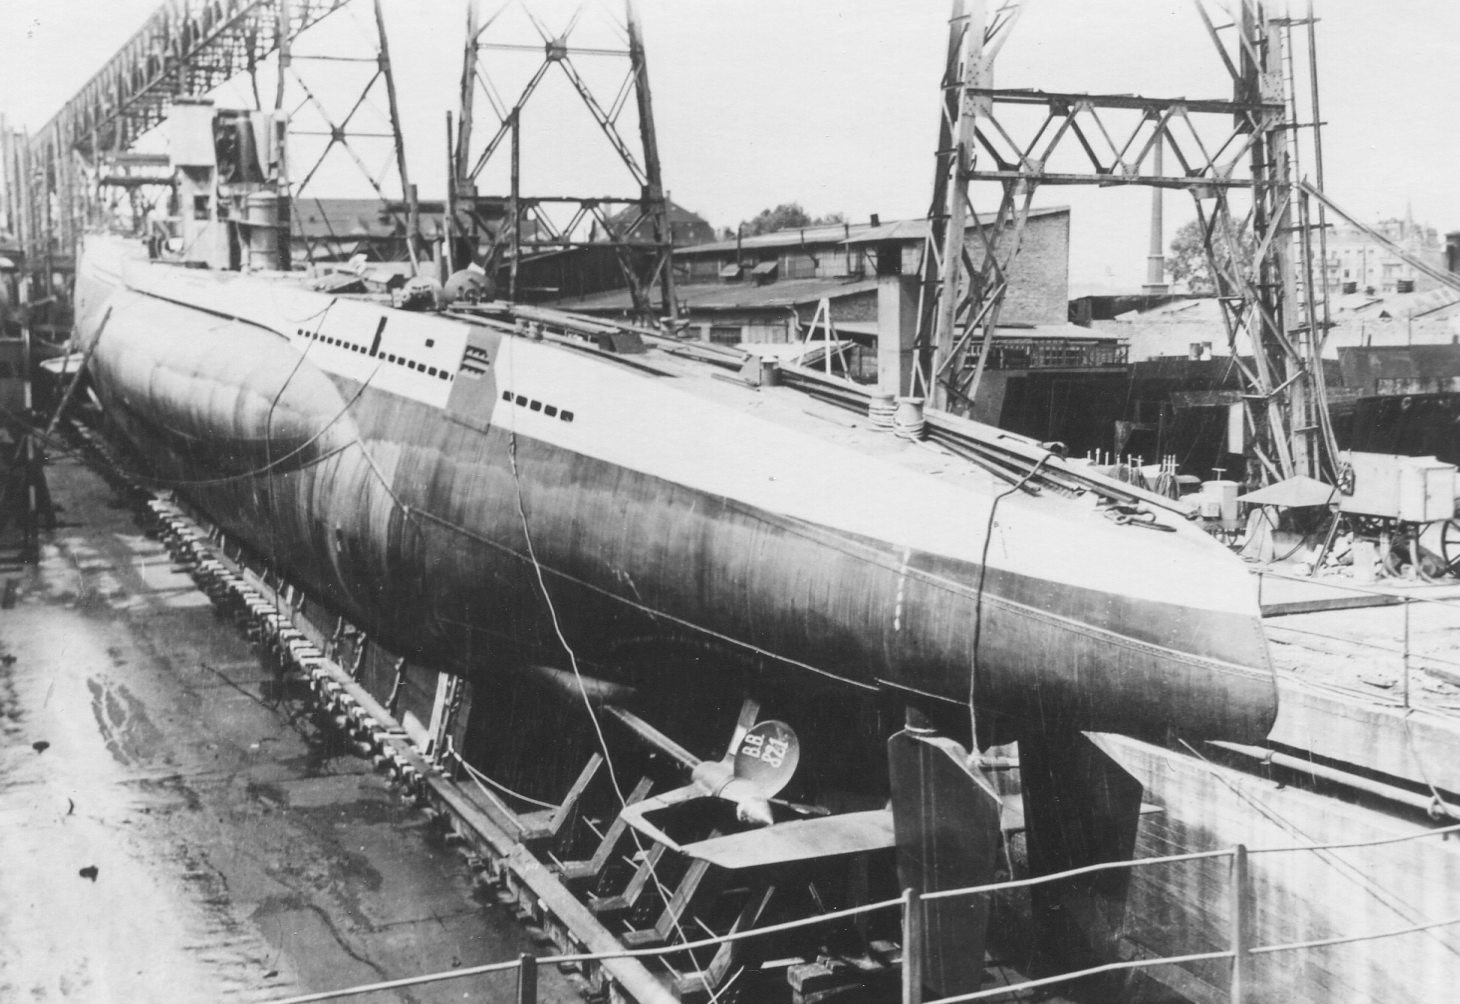 U-821 under construction at the Oderwerke shipyard in Stettin, Germany, 1943